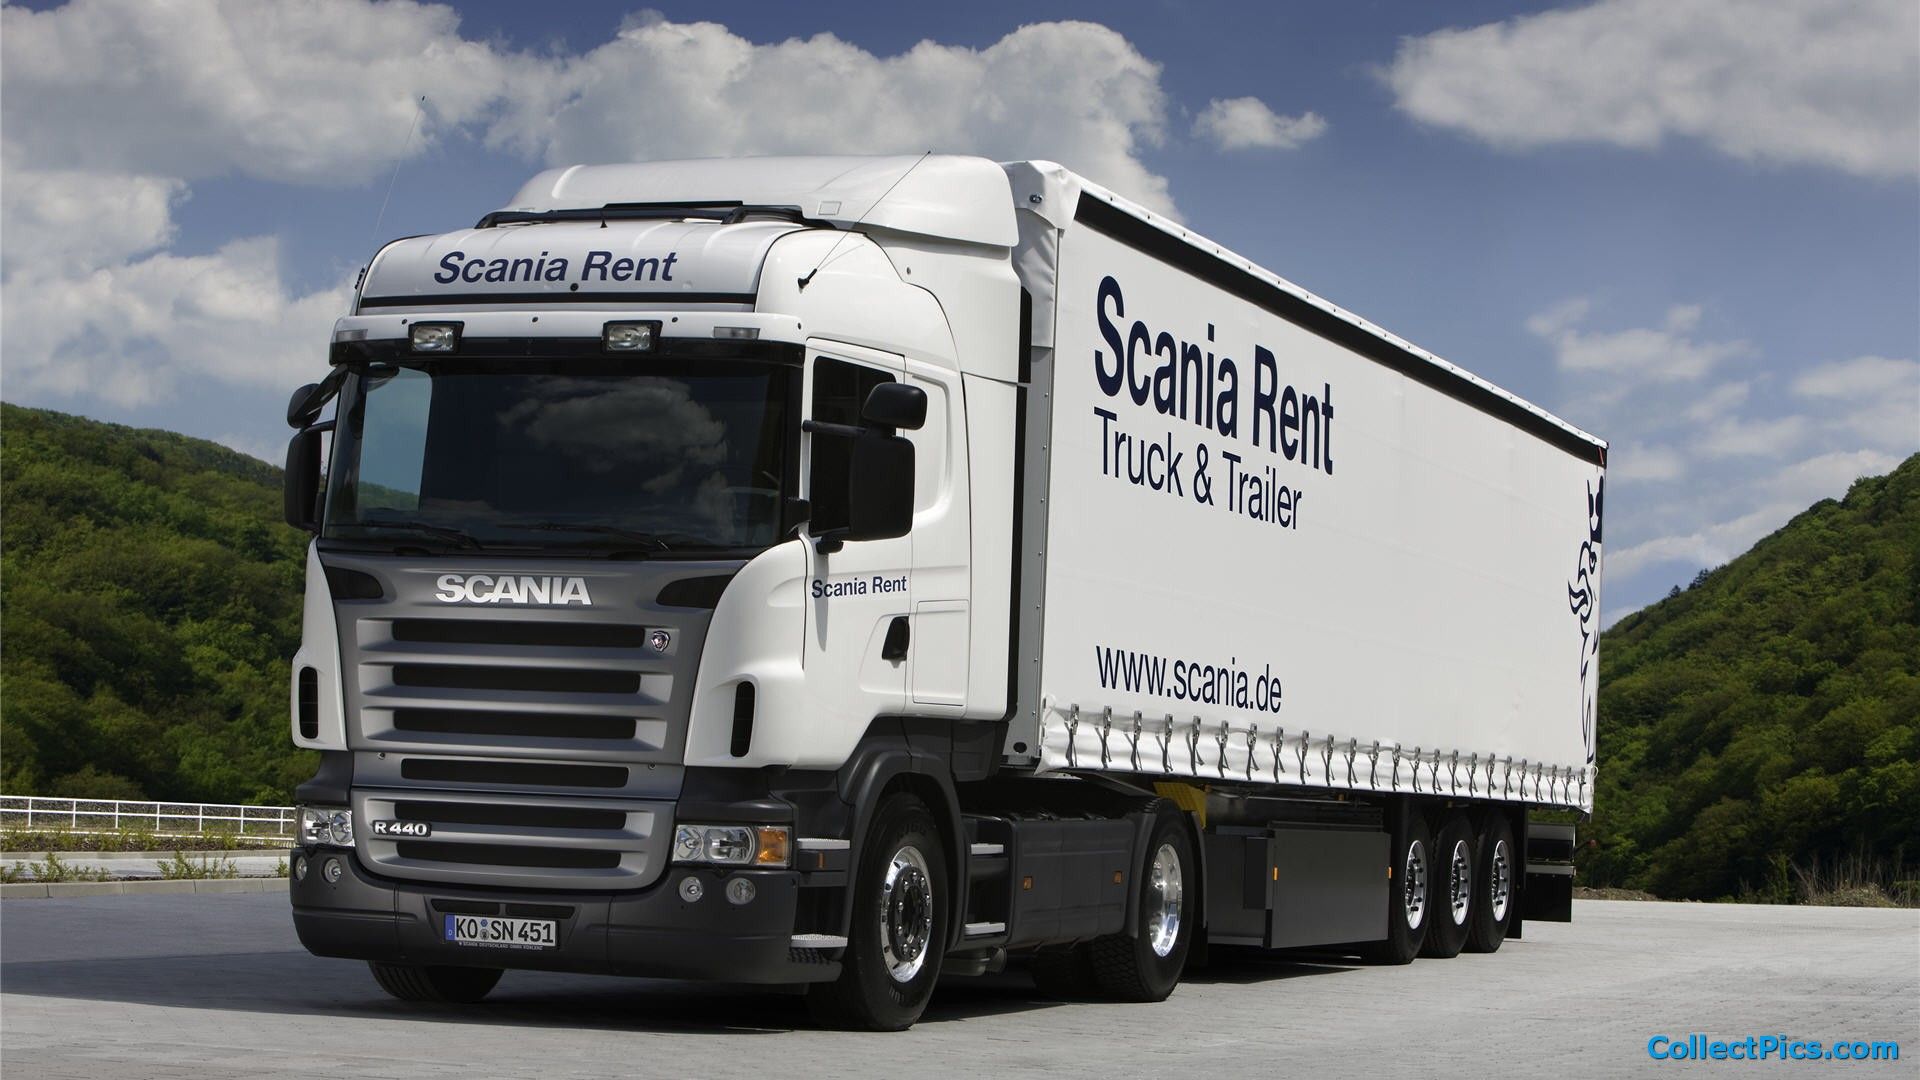 Scania Trucks Wallpaperwallpaperafari.com